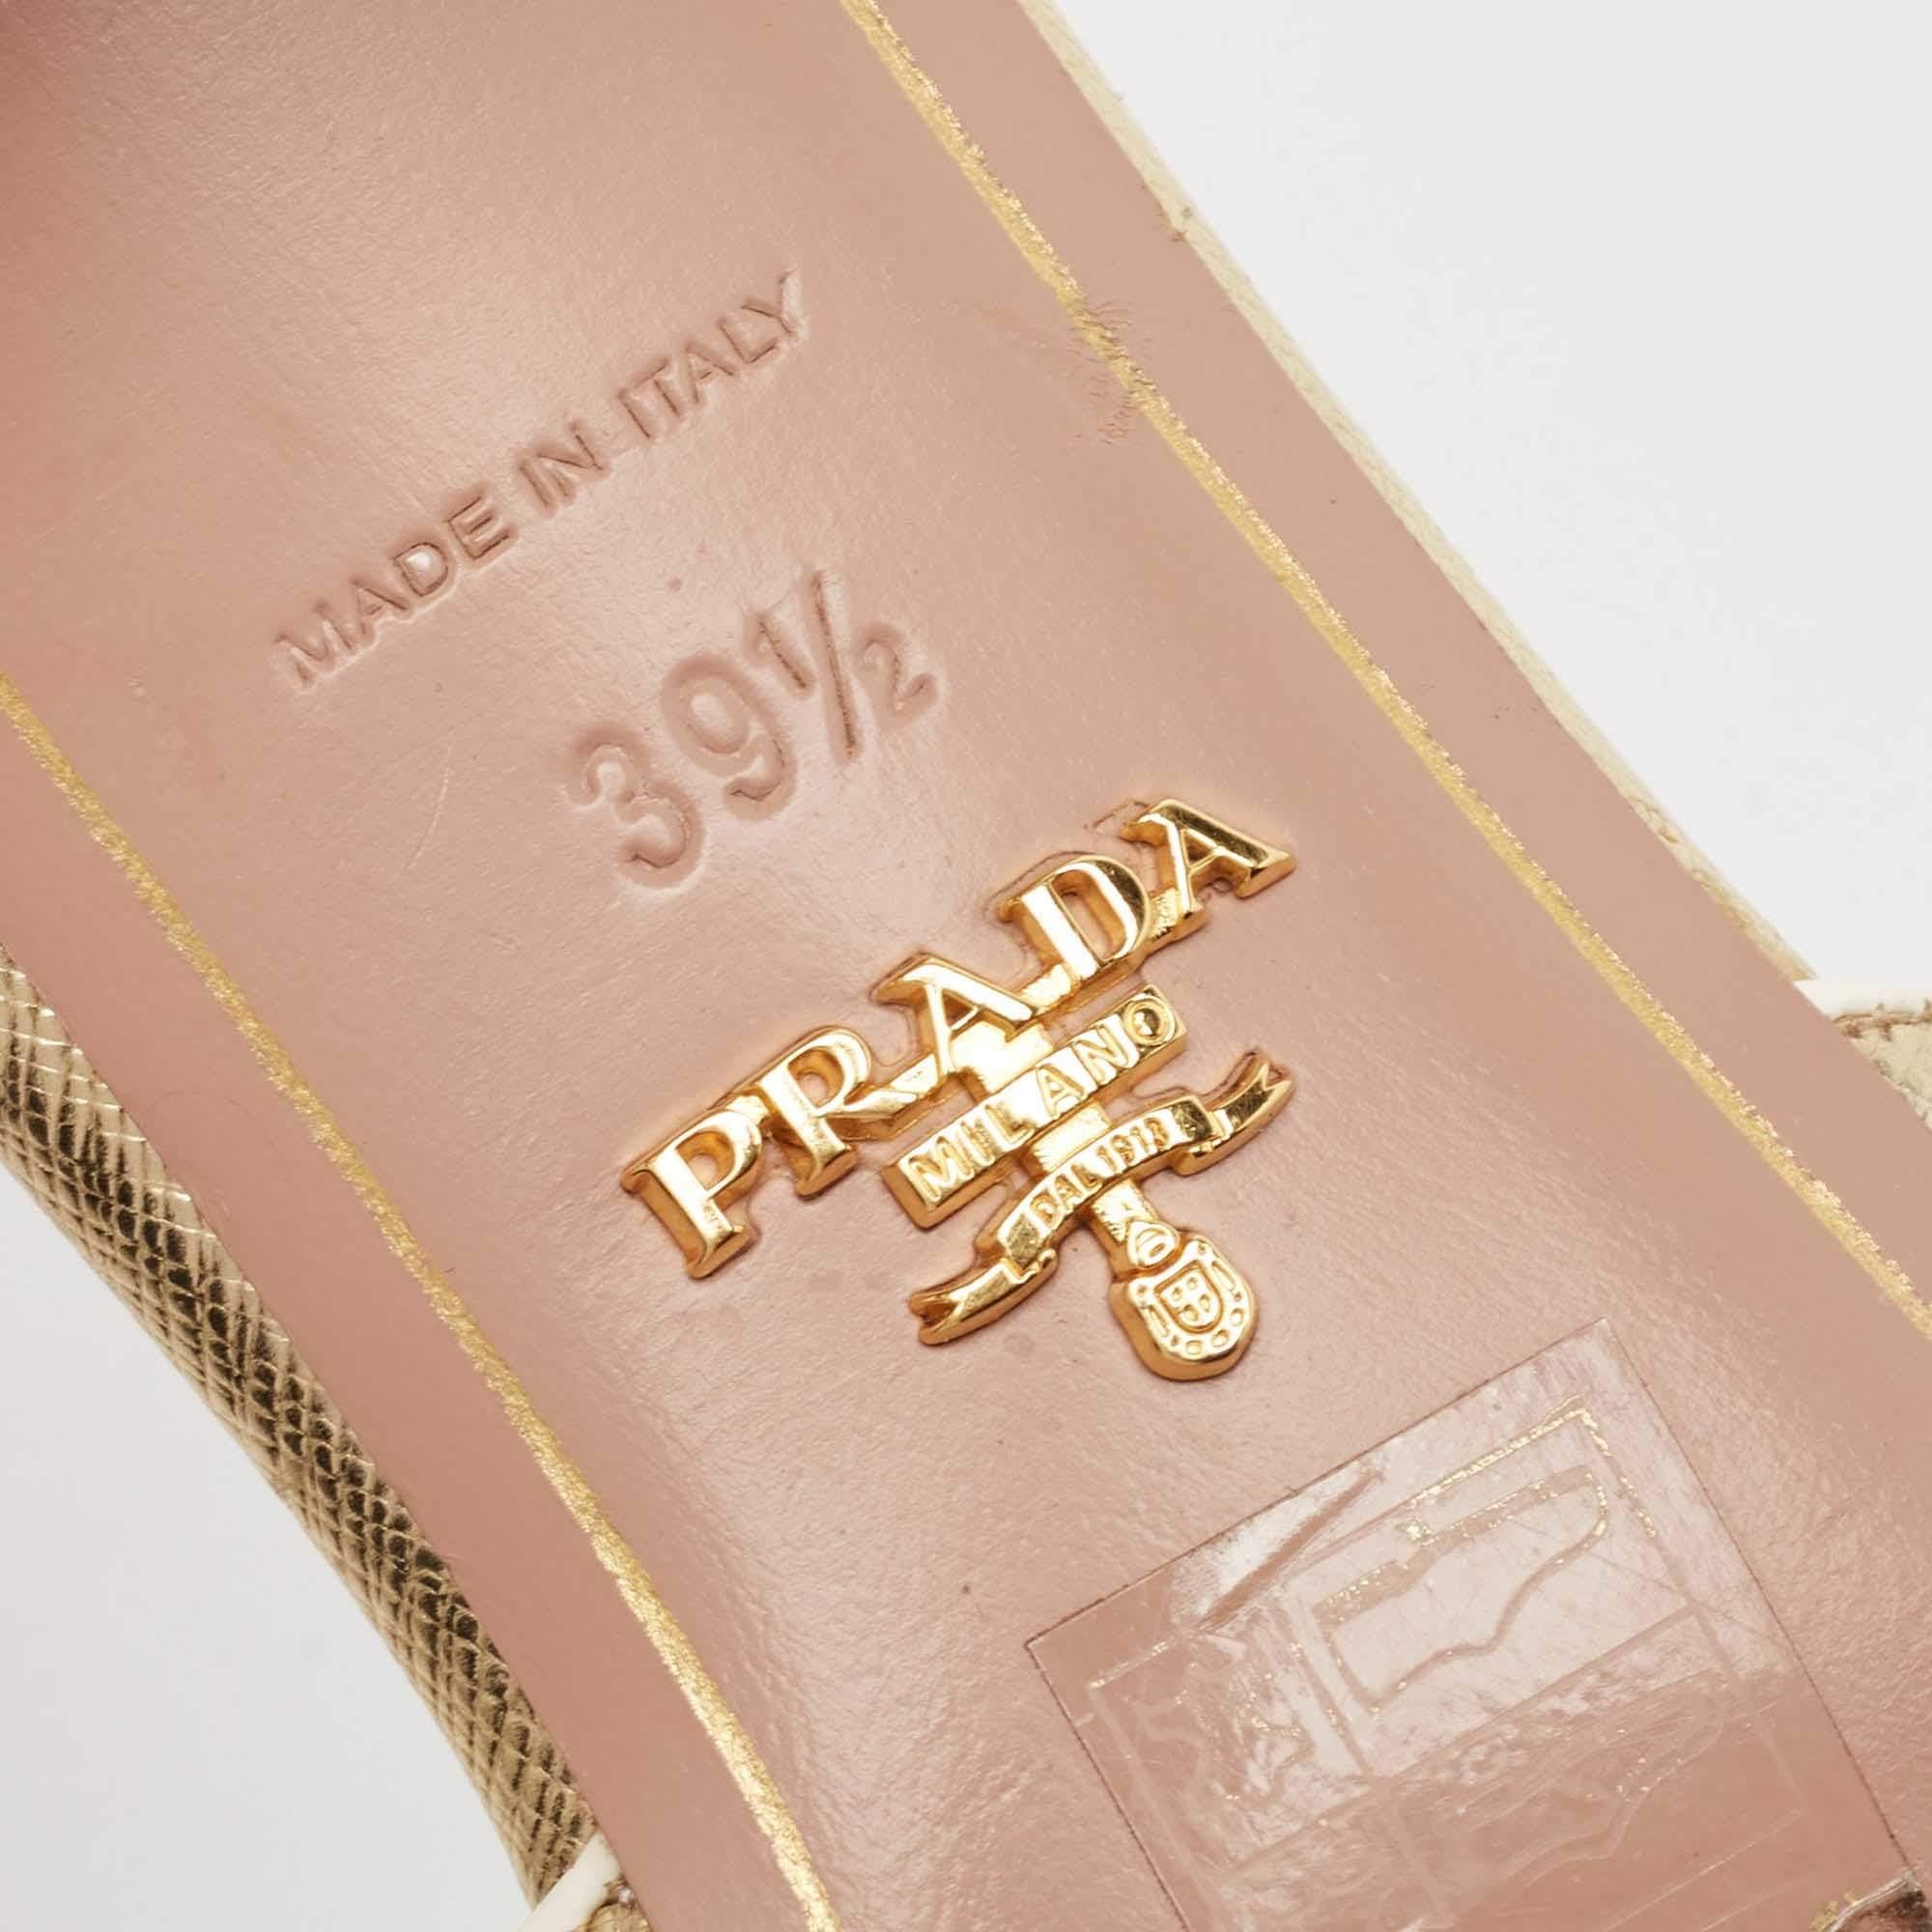 Prada Gold Leather Slide Sandals Size 39.5 4